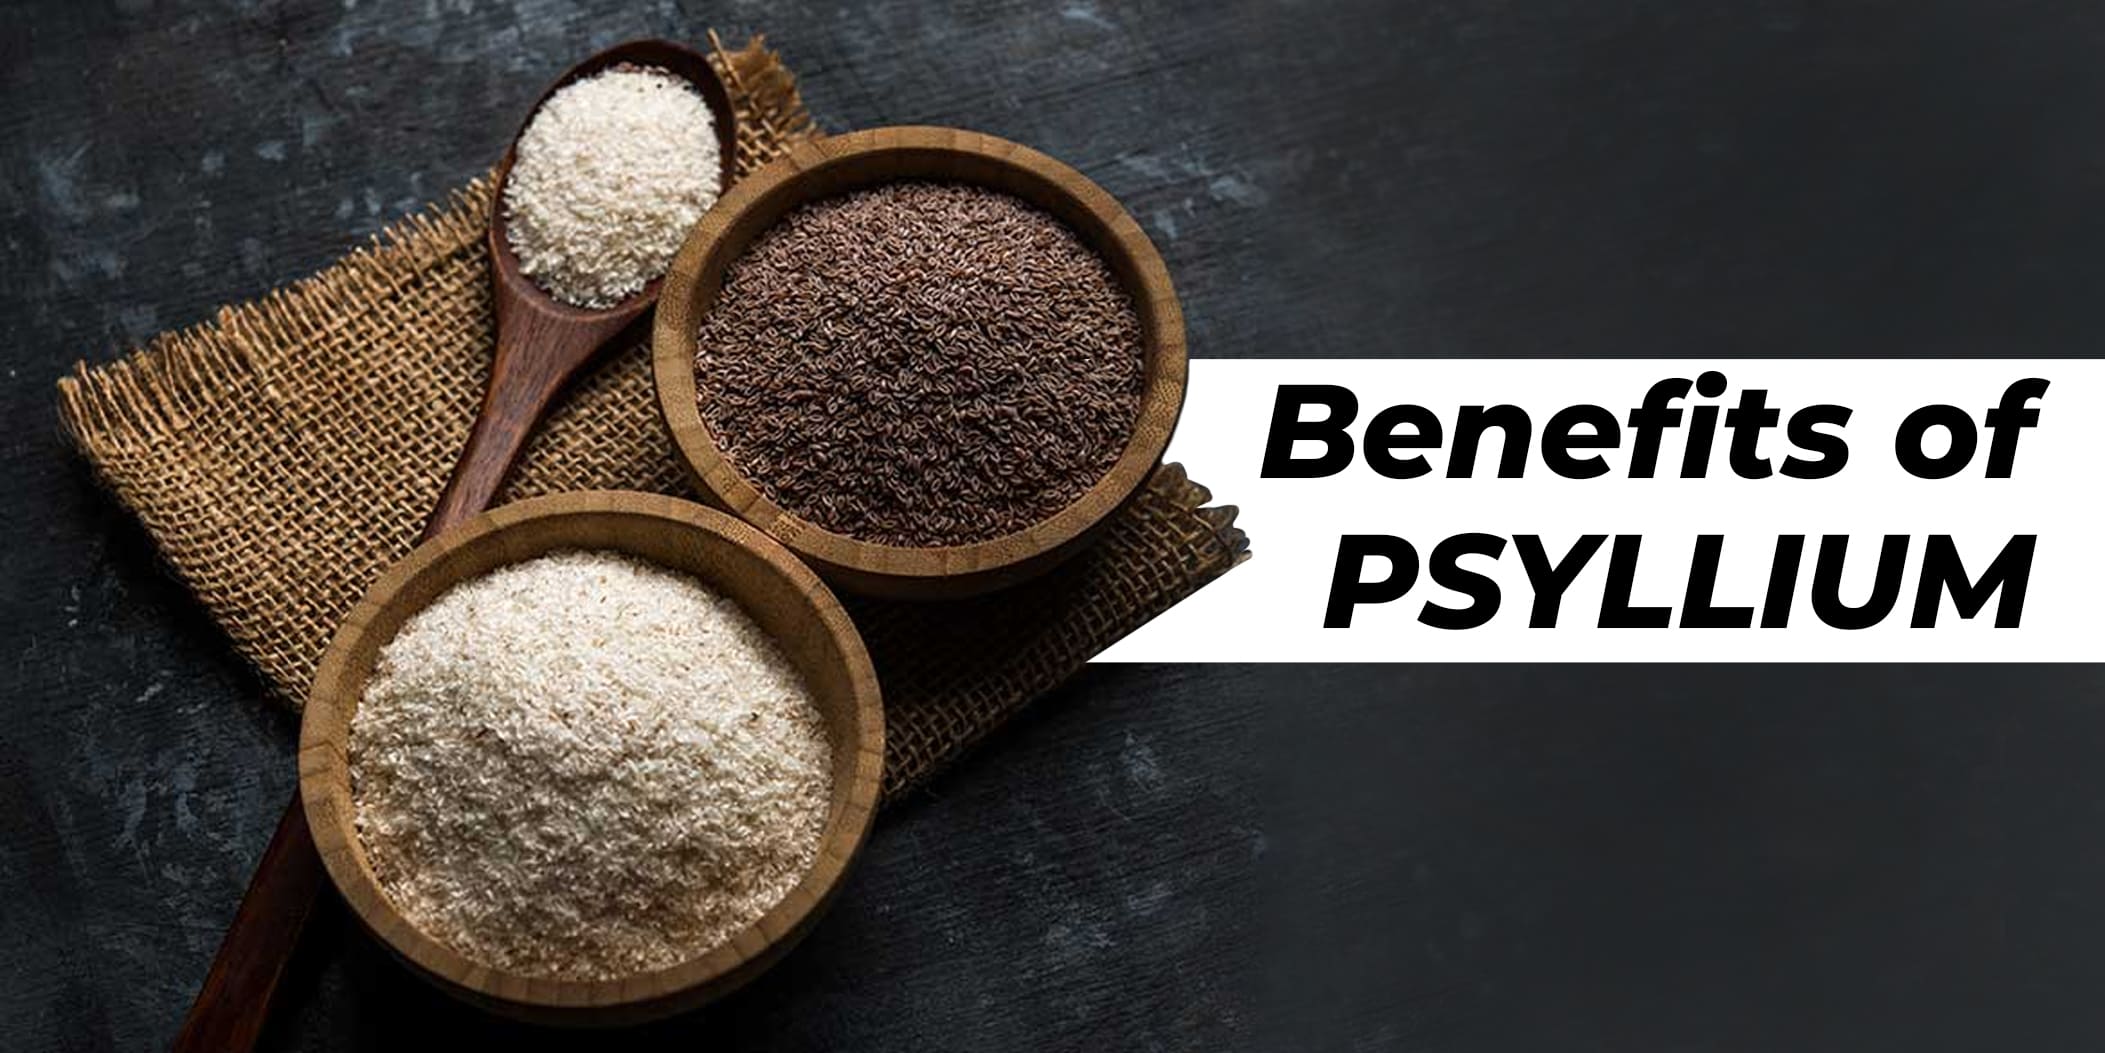 Benefits of Psyllium